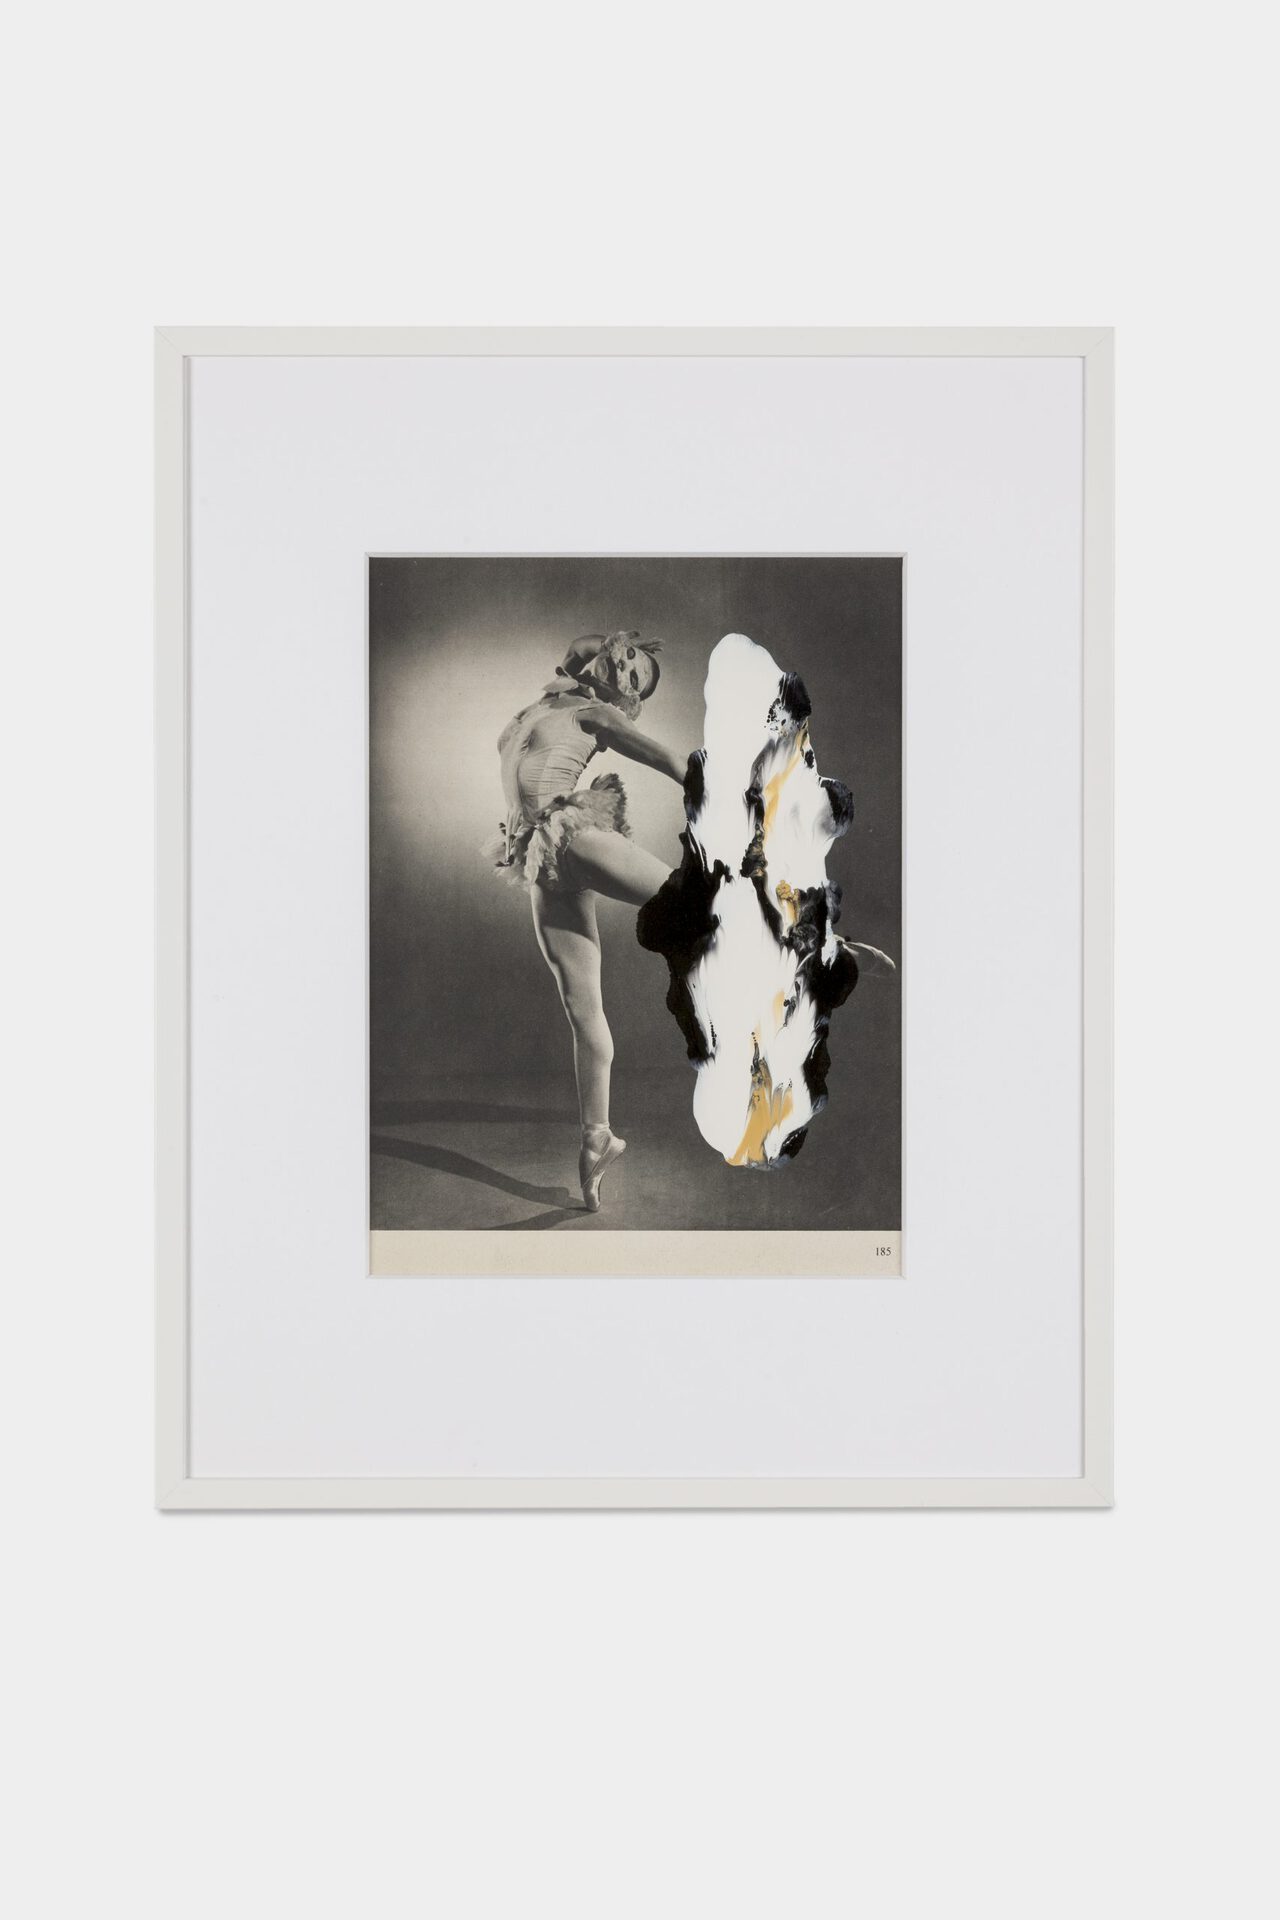 Linder, Superautomatism Grand Jeté XI, 2015, enamel on book page, 45 x 37 cm